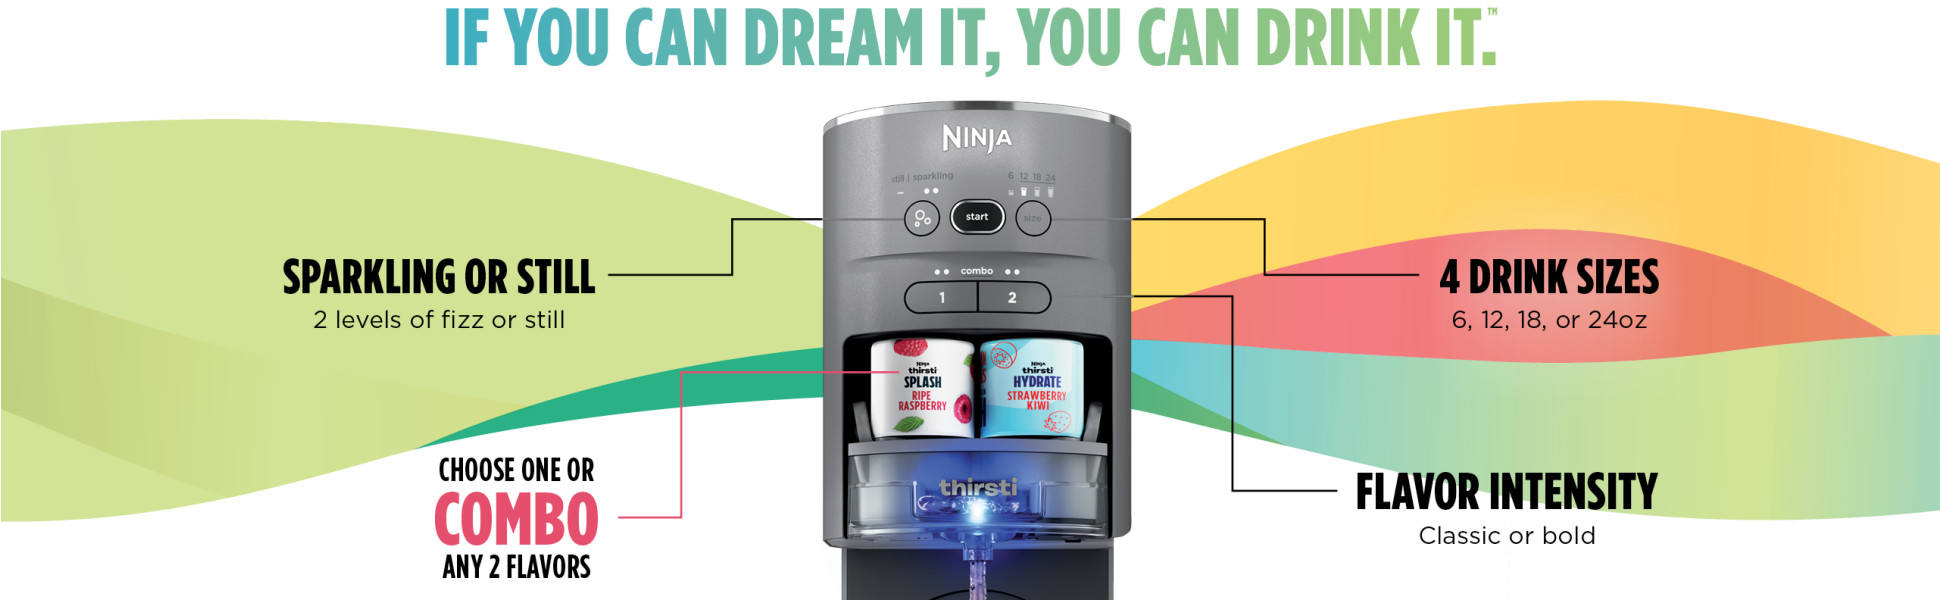 Get Fizzing: Setting Up Your Ninja Thirsti™ Drink System 